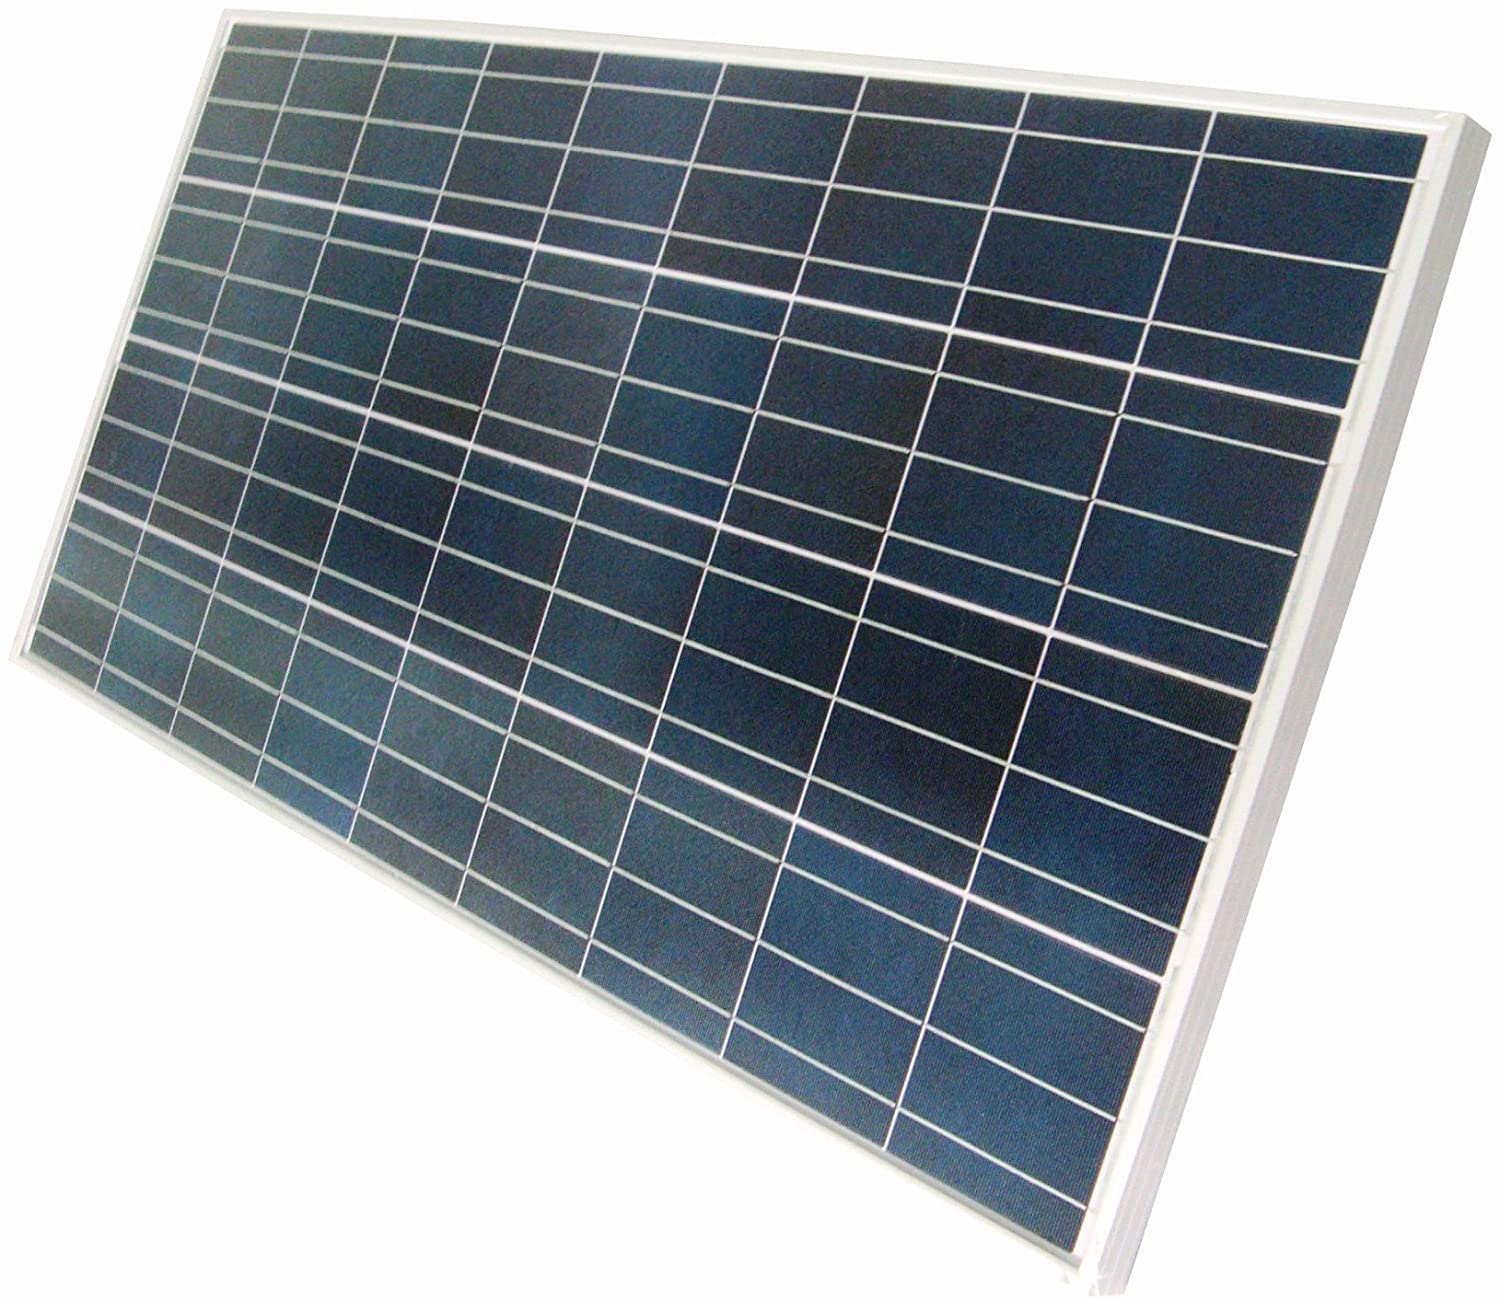 How Solar Panels Work?